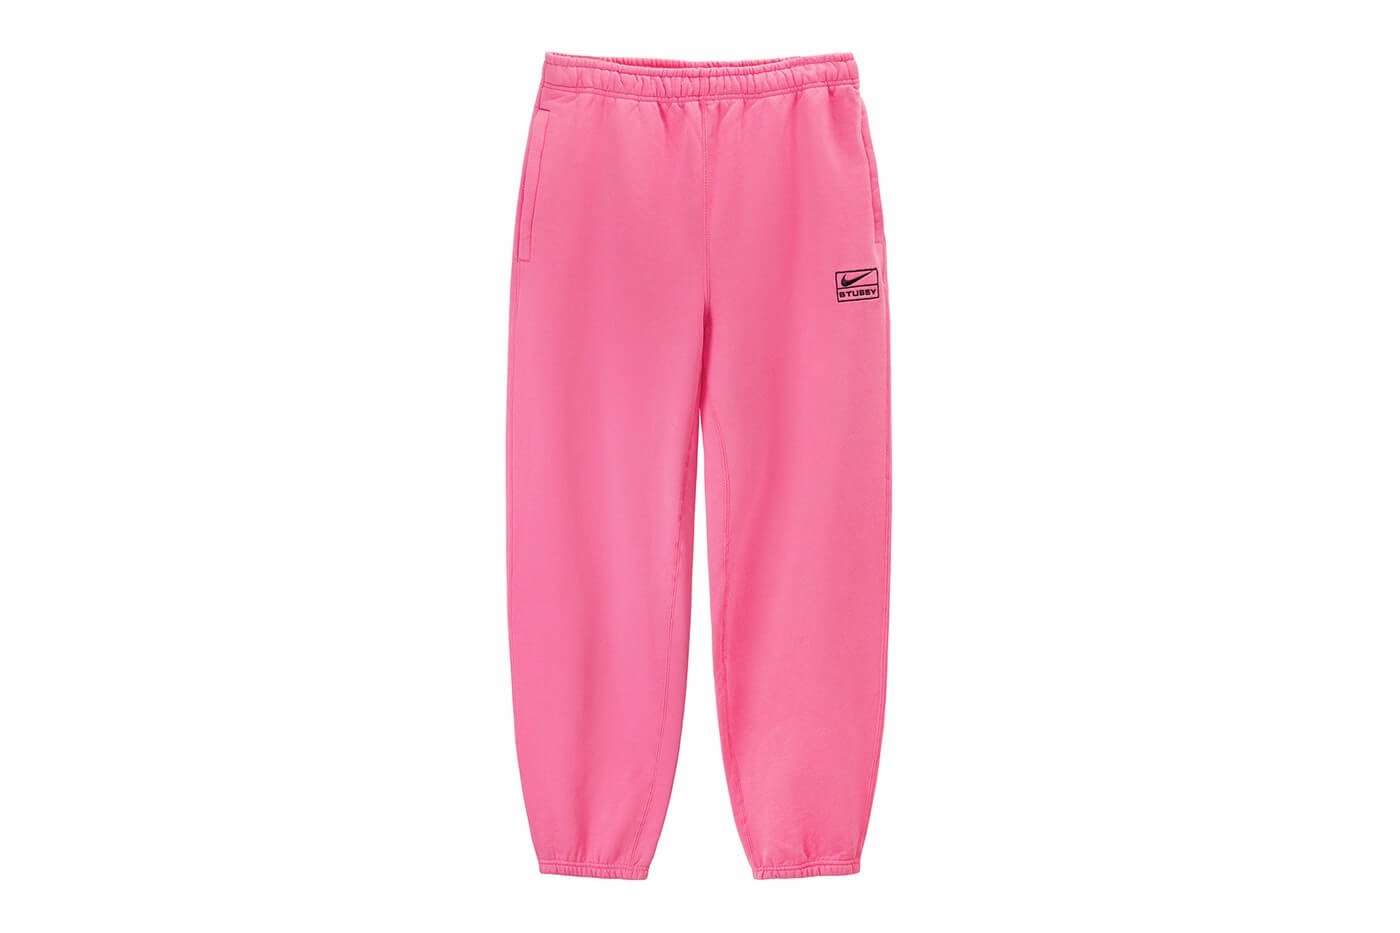 CNK-nike-stussy-apparel-collection-pink-sweatpants.jpeg